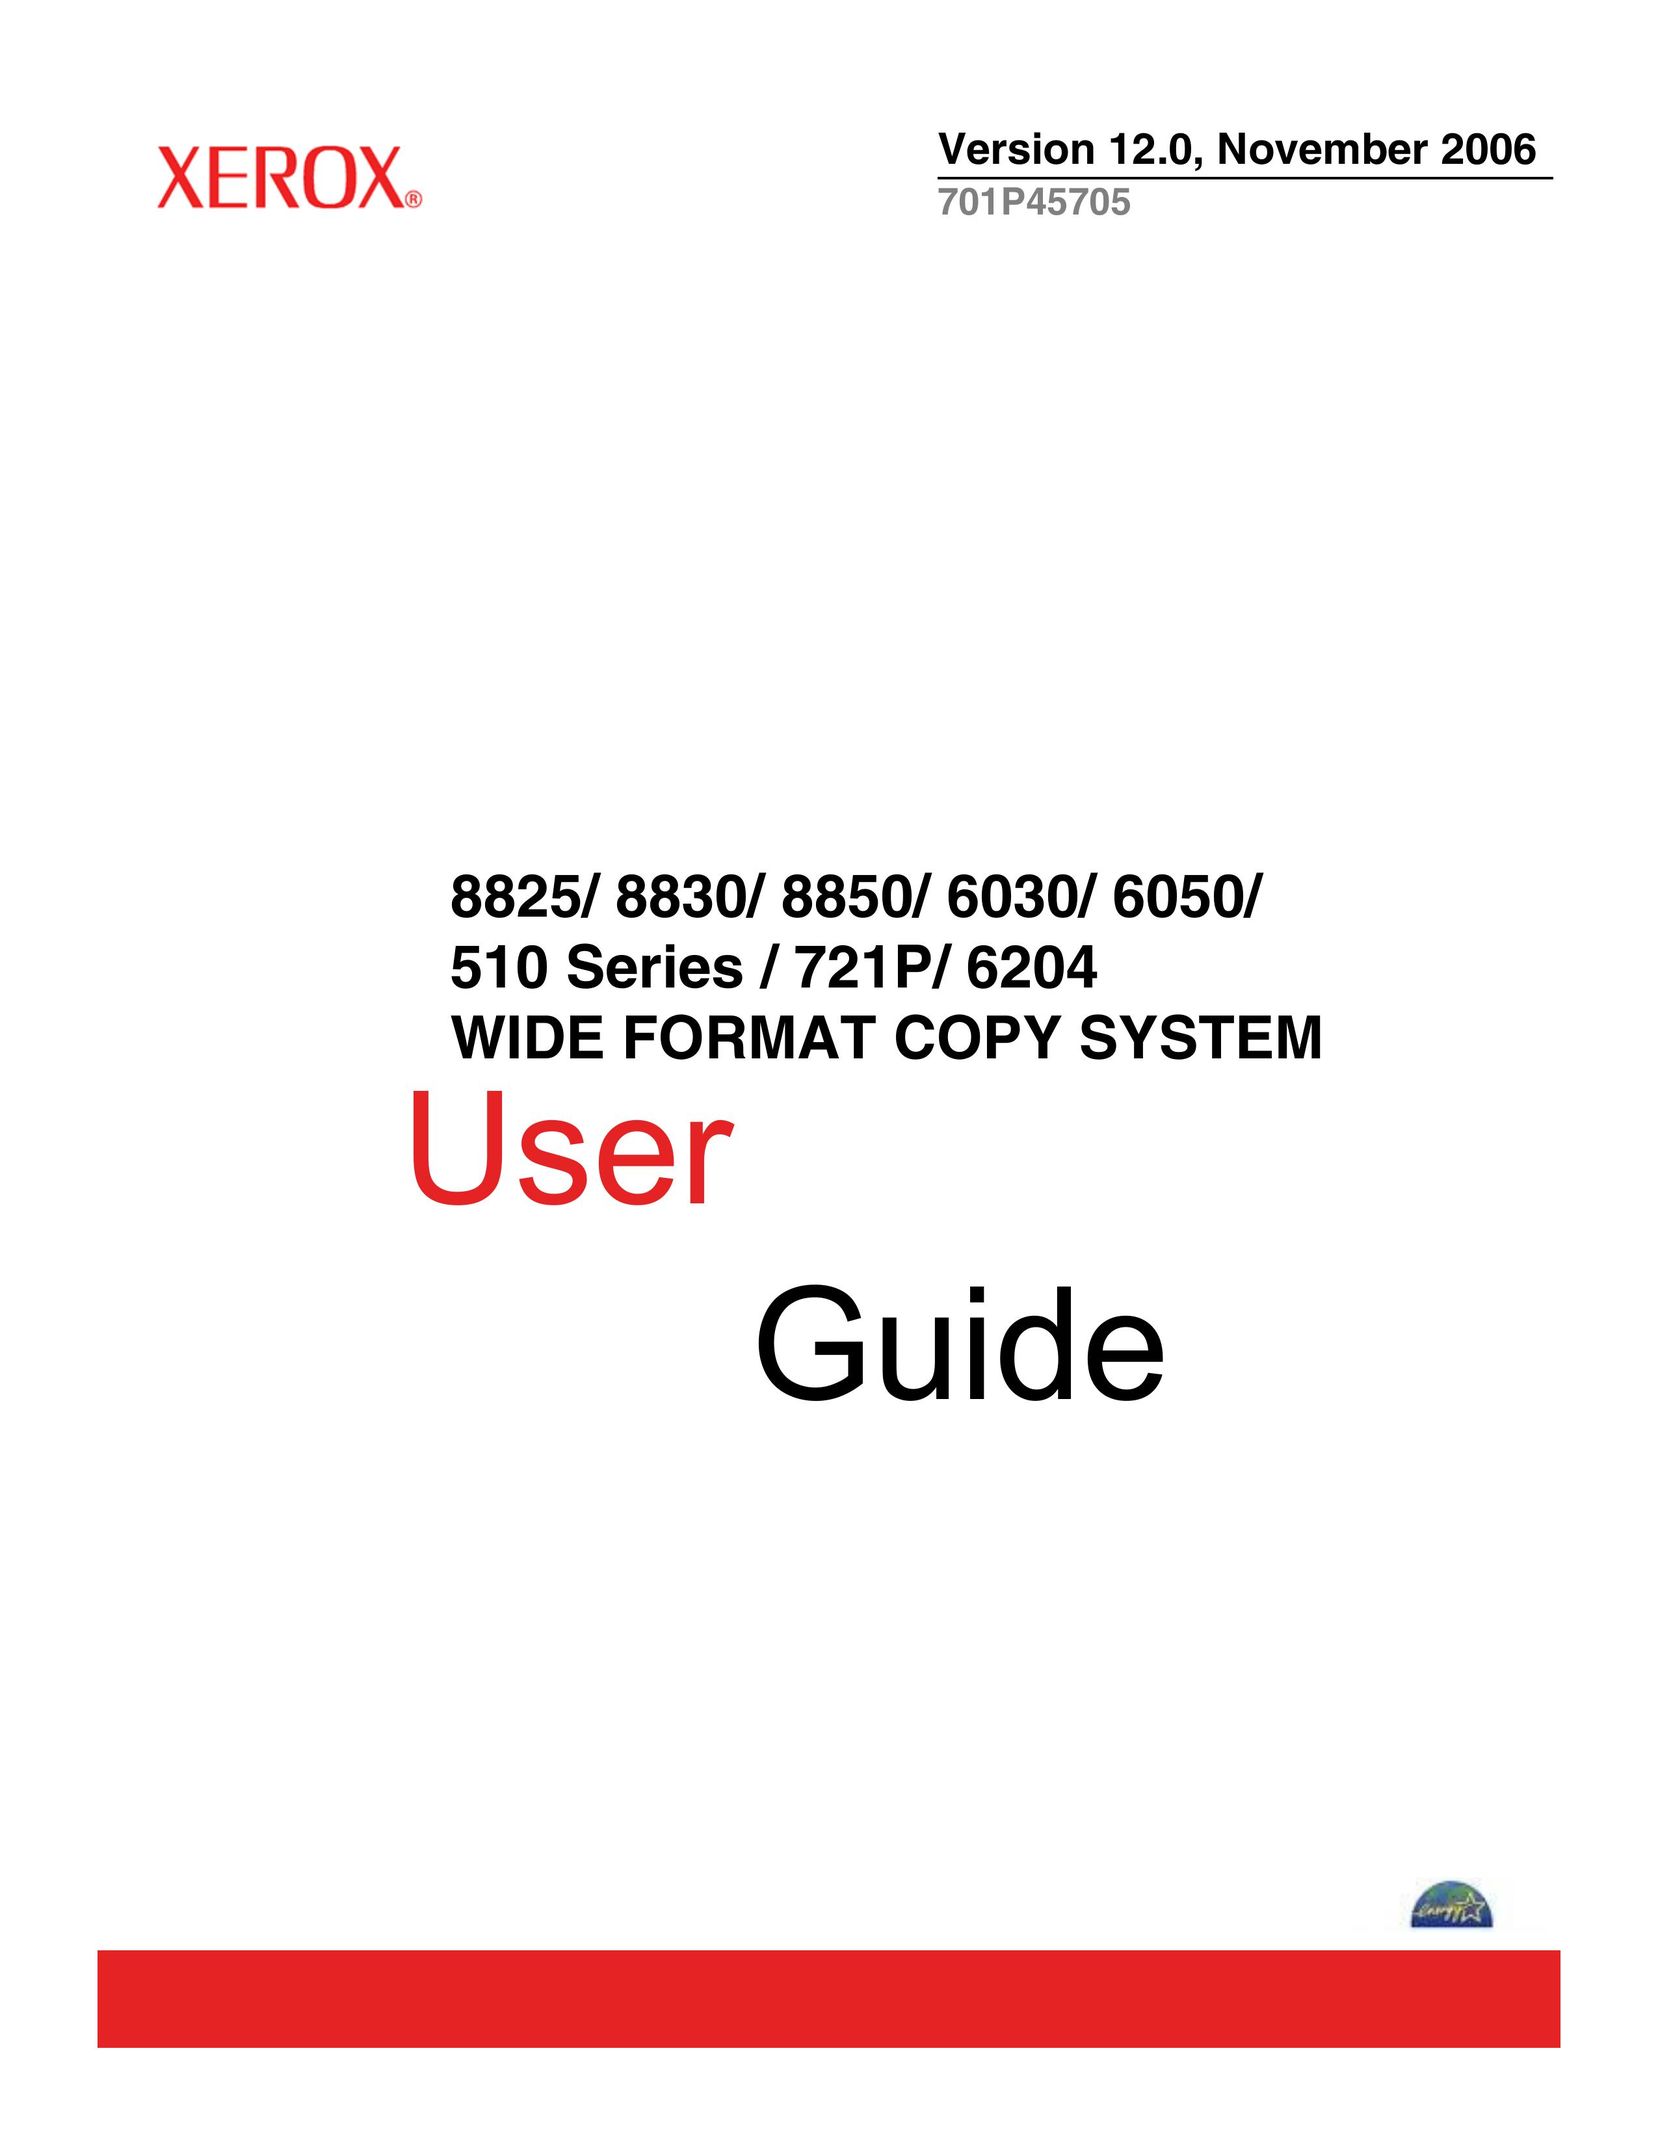 Xerox 721P Copier User Manual